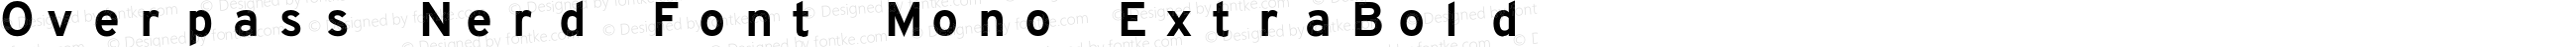 Overpass ExtraBold Nerd Font Complete Mono